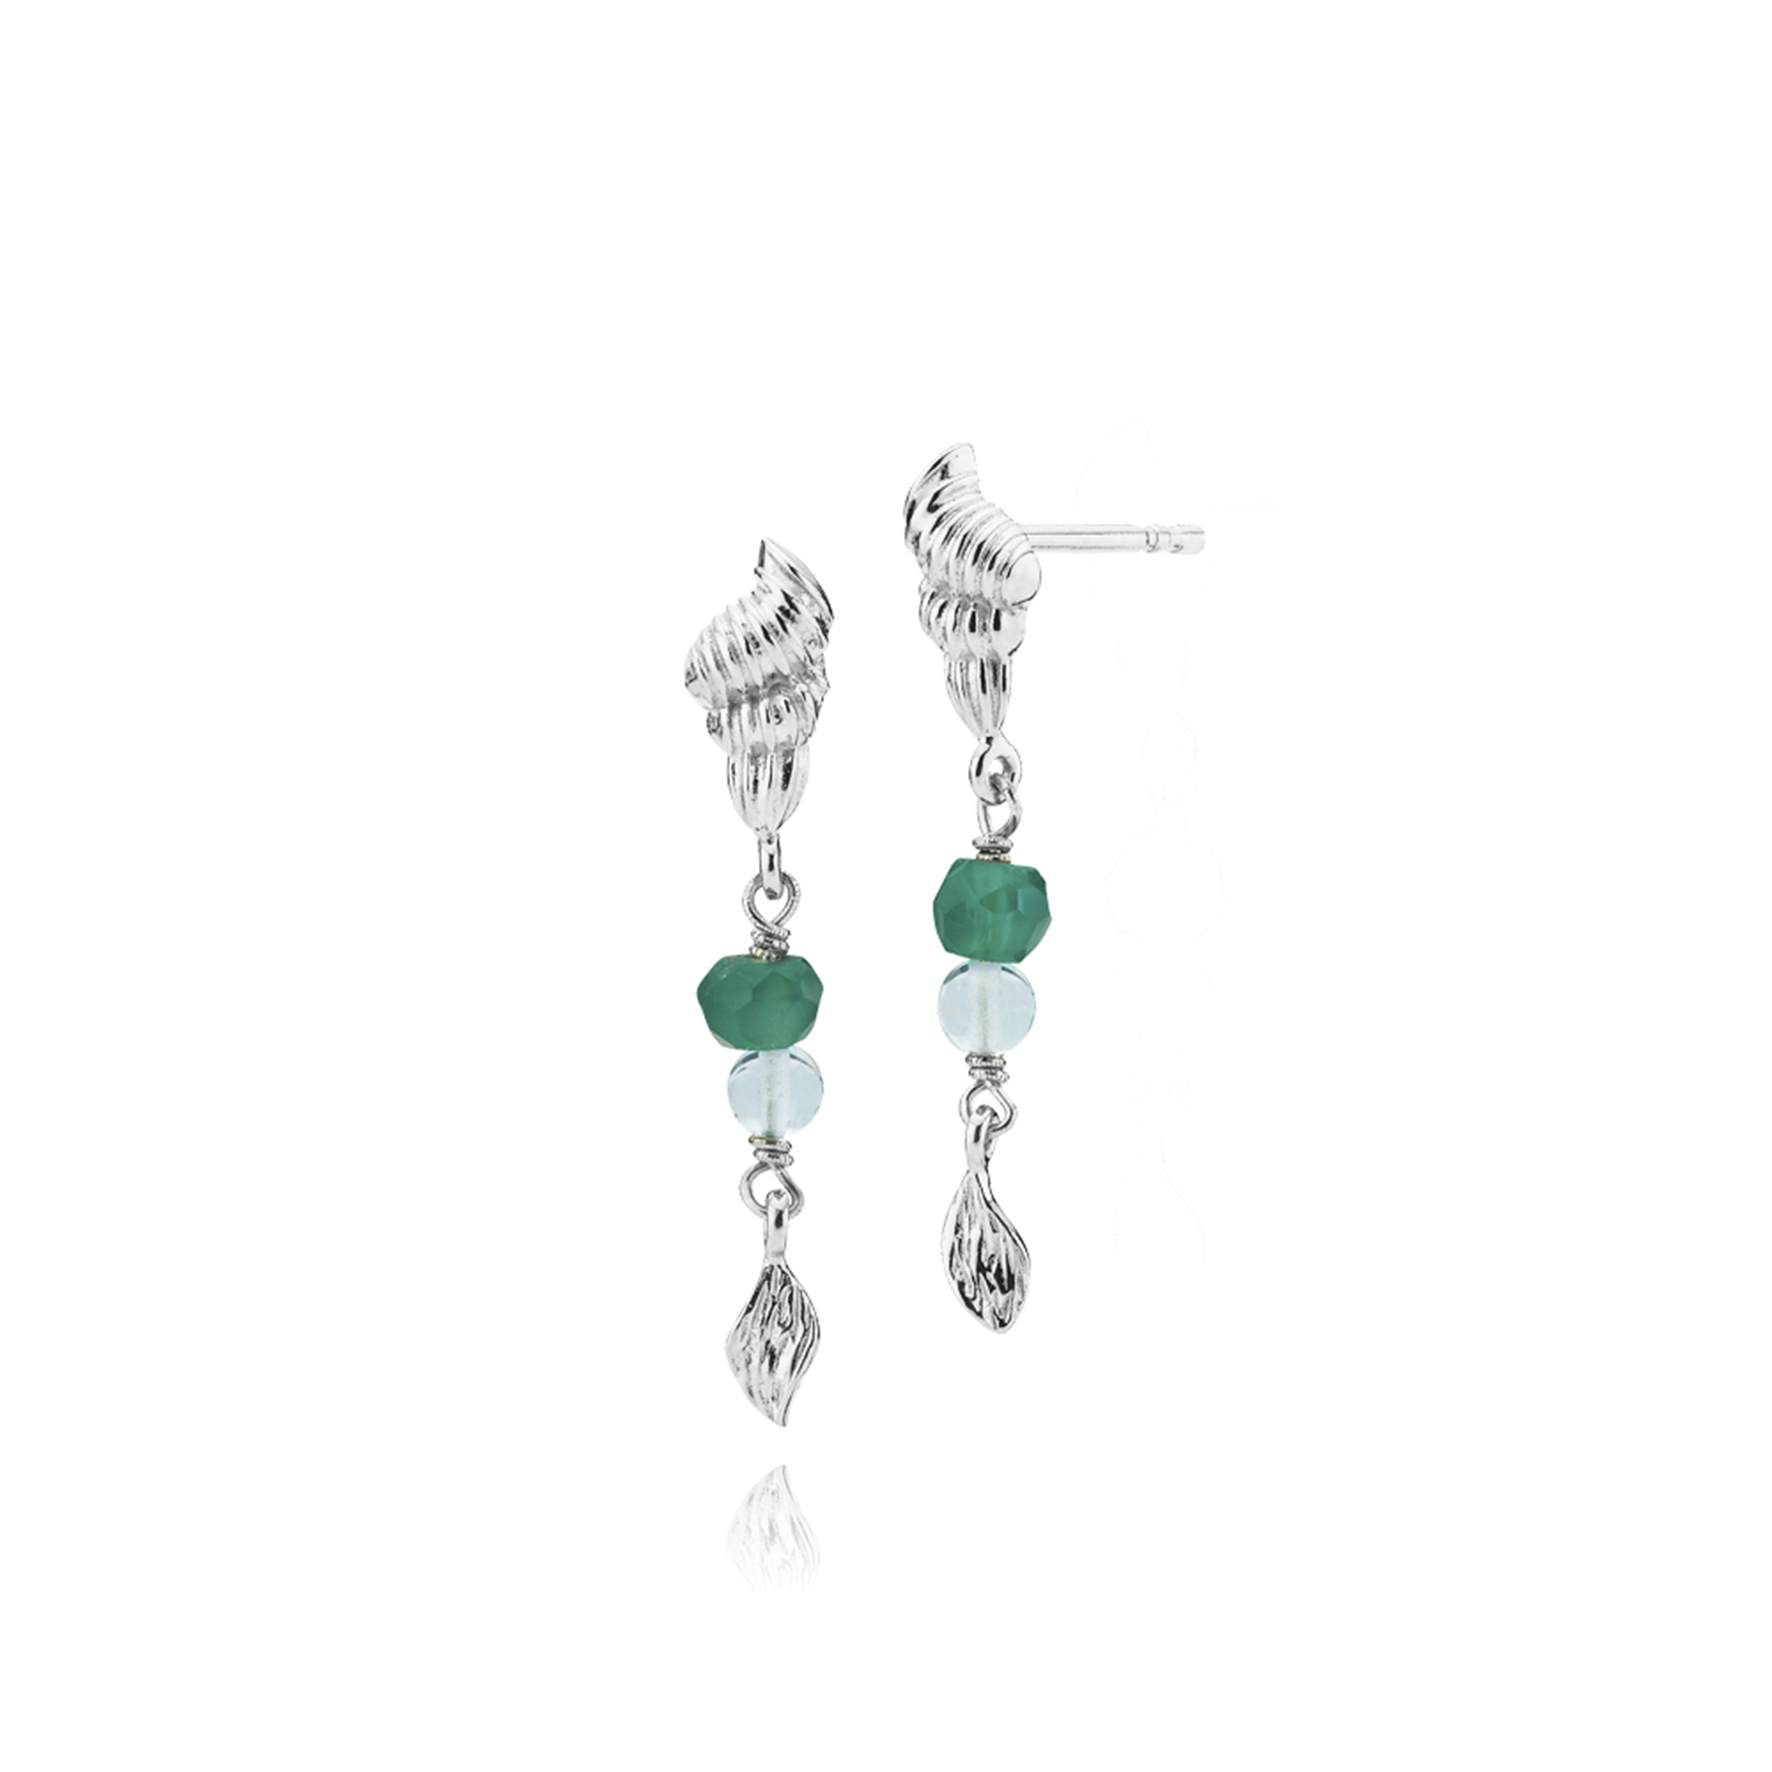 Kaia Earrings Green Onyx and Aqua Crystal fra Sistie i Sølv Sterling 925